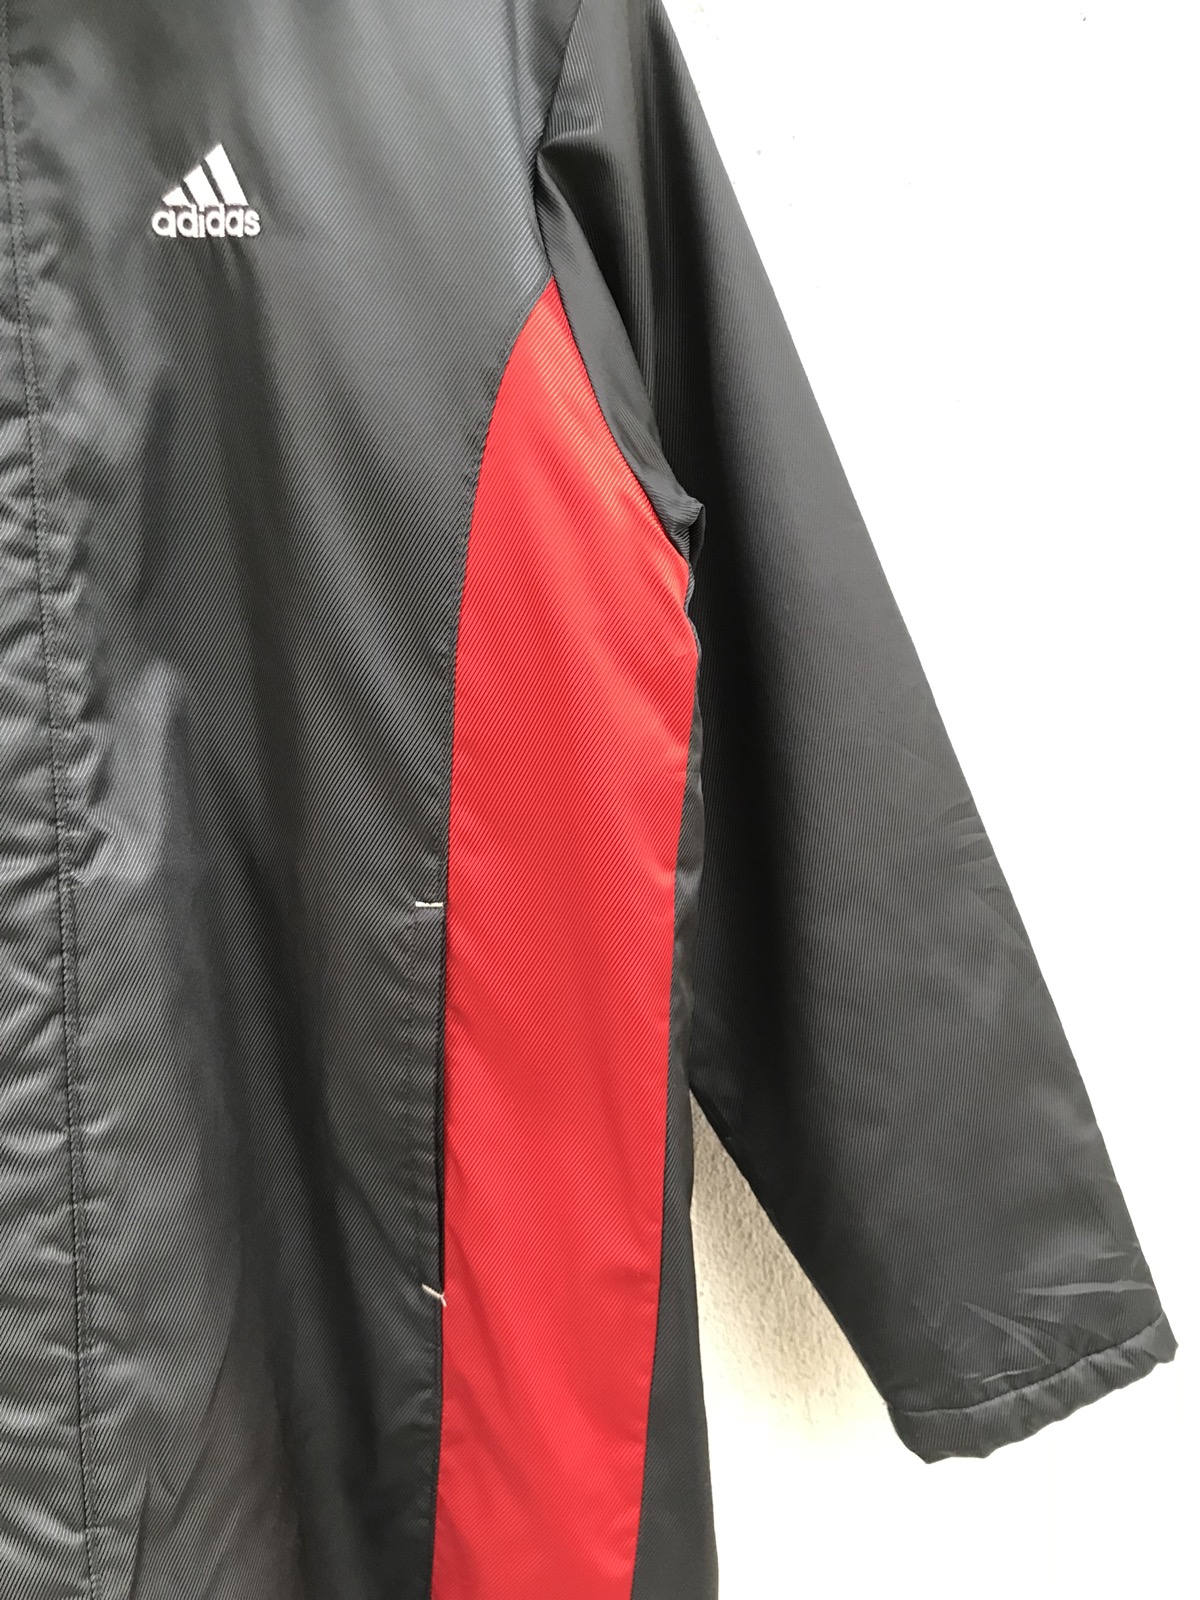 Adidas Hoodie Long Jacket Armpit 22”x32” - 5